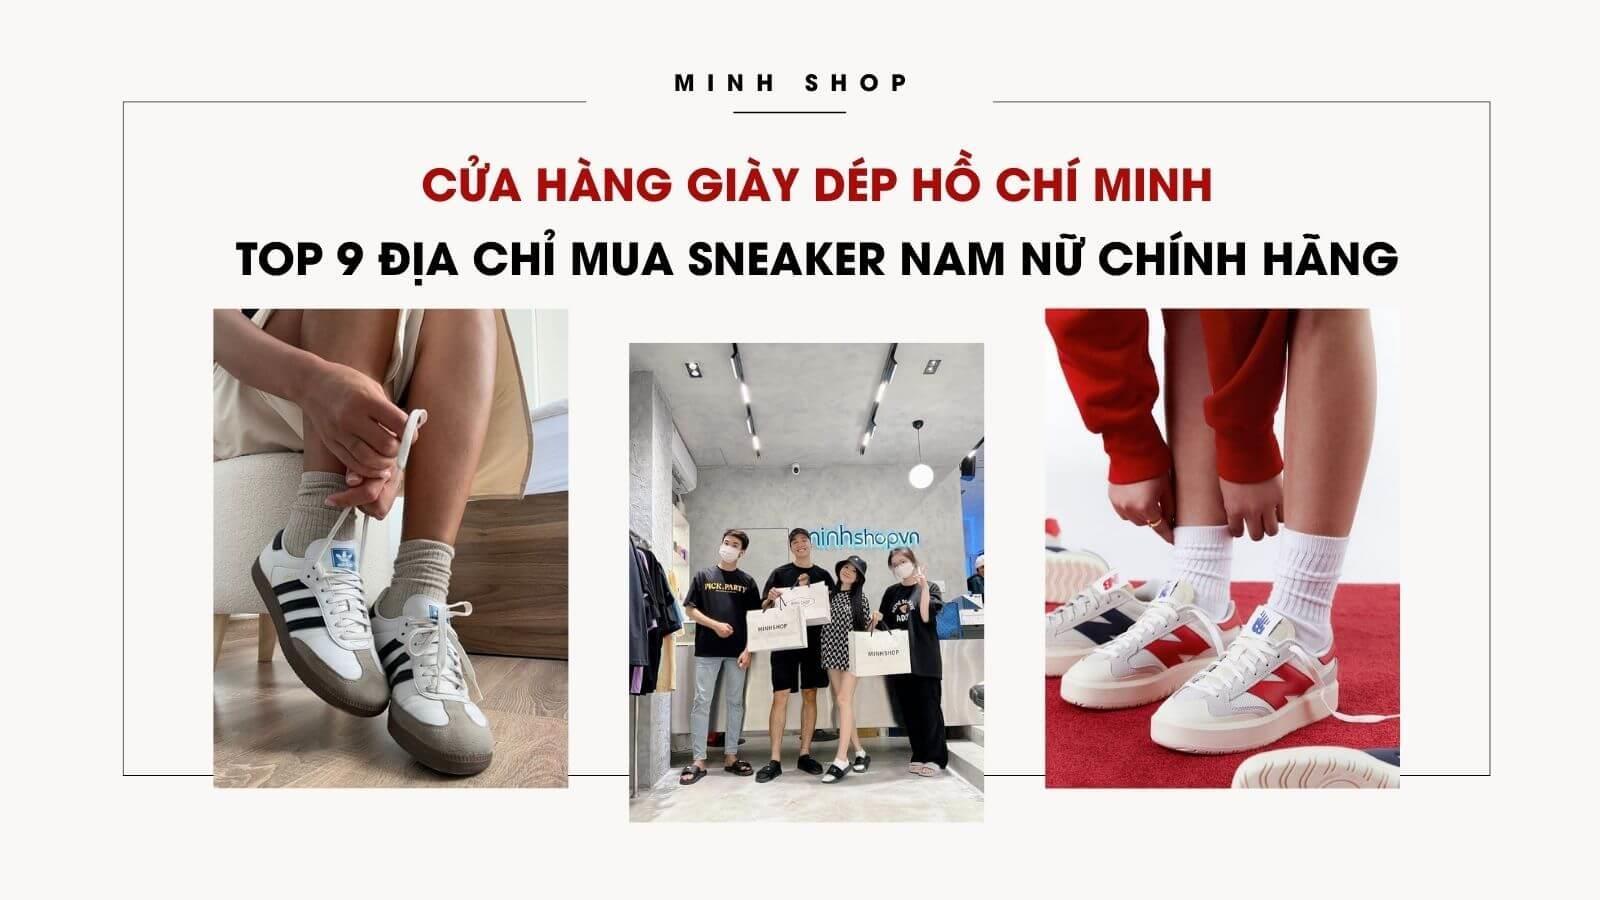 cua-hang-giay-dep-ho-chi-minh-top-9-dia-chi-mua-sneaker-nam-nu-chinh-hang